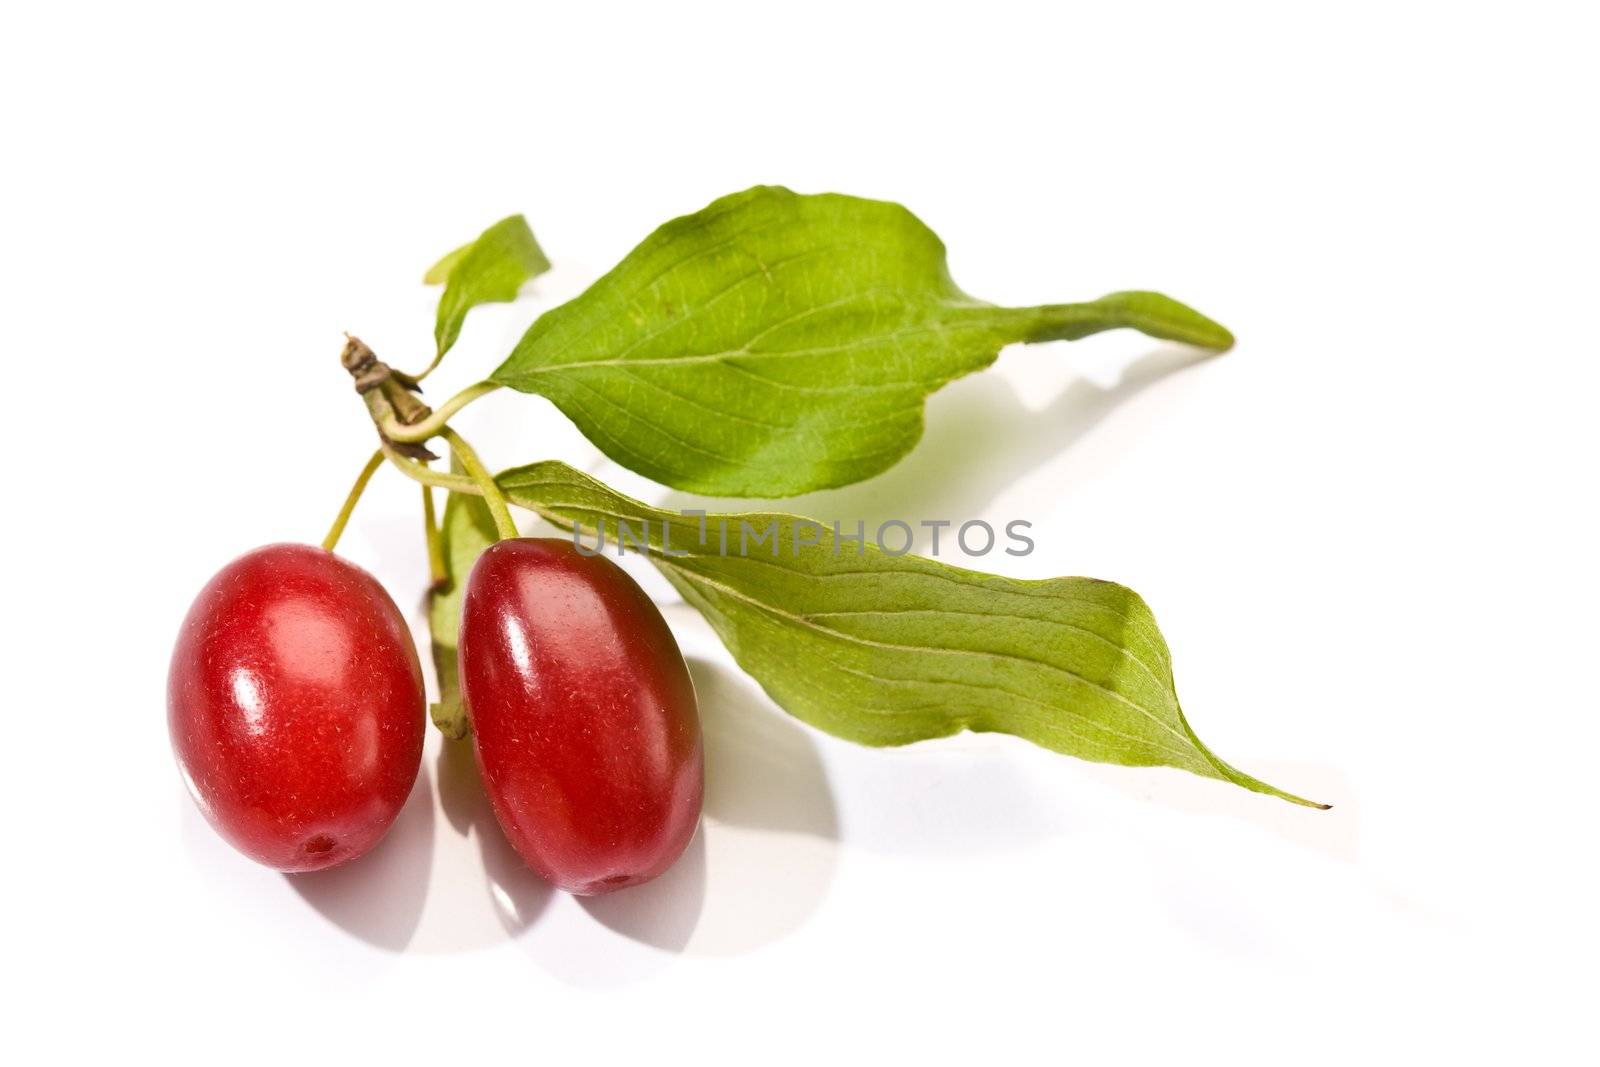 Cornelian cherries over white background with liaves